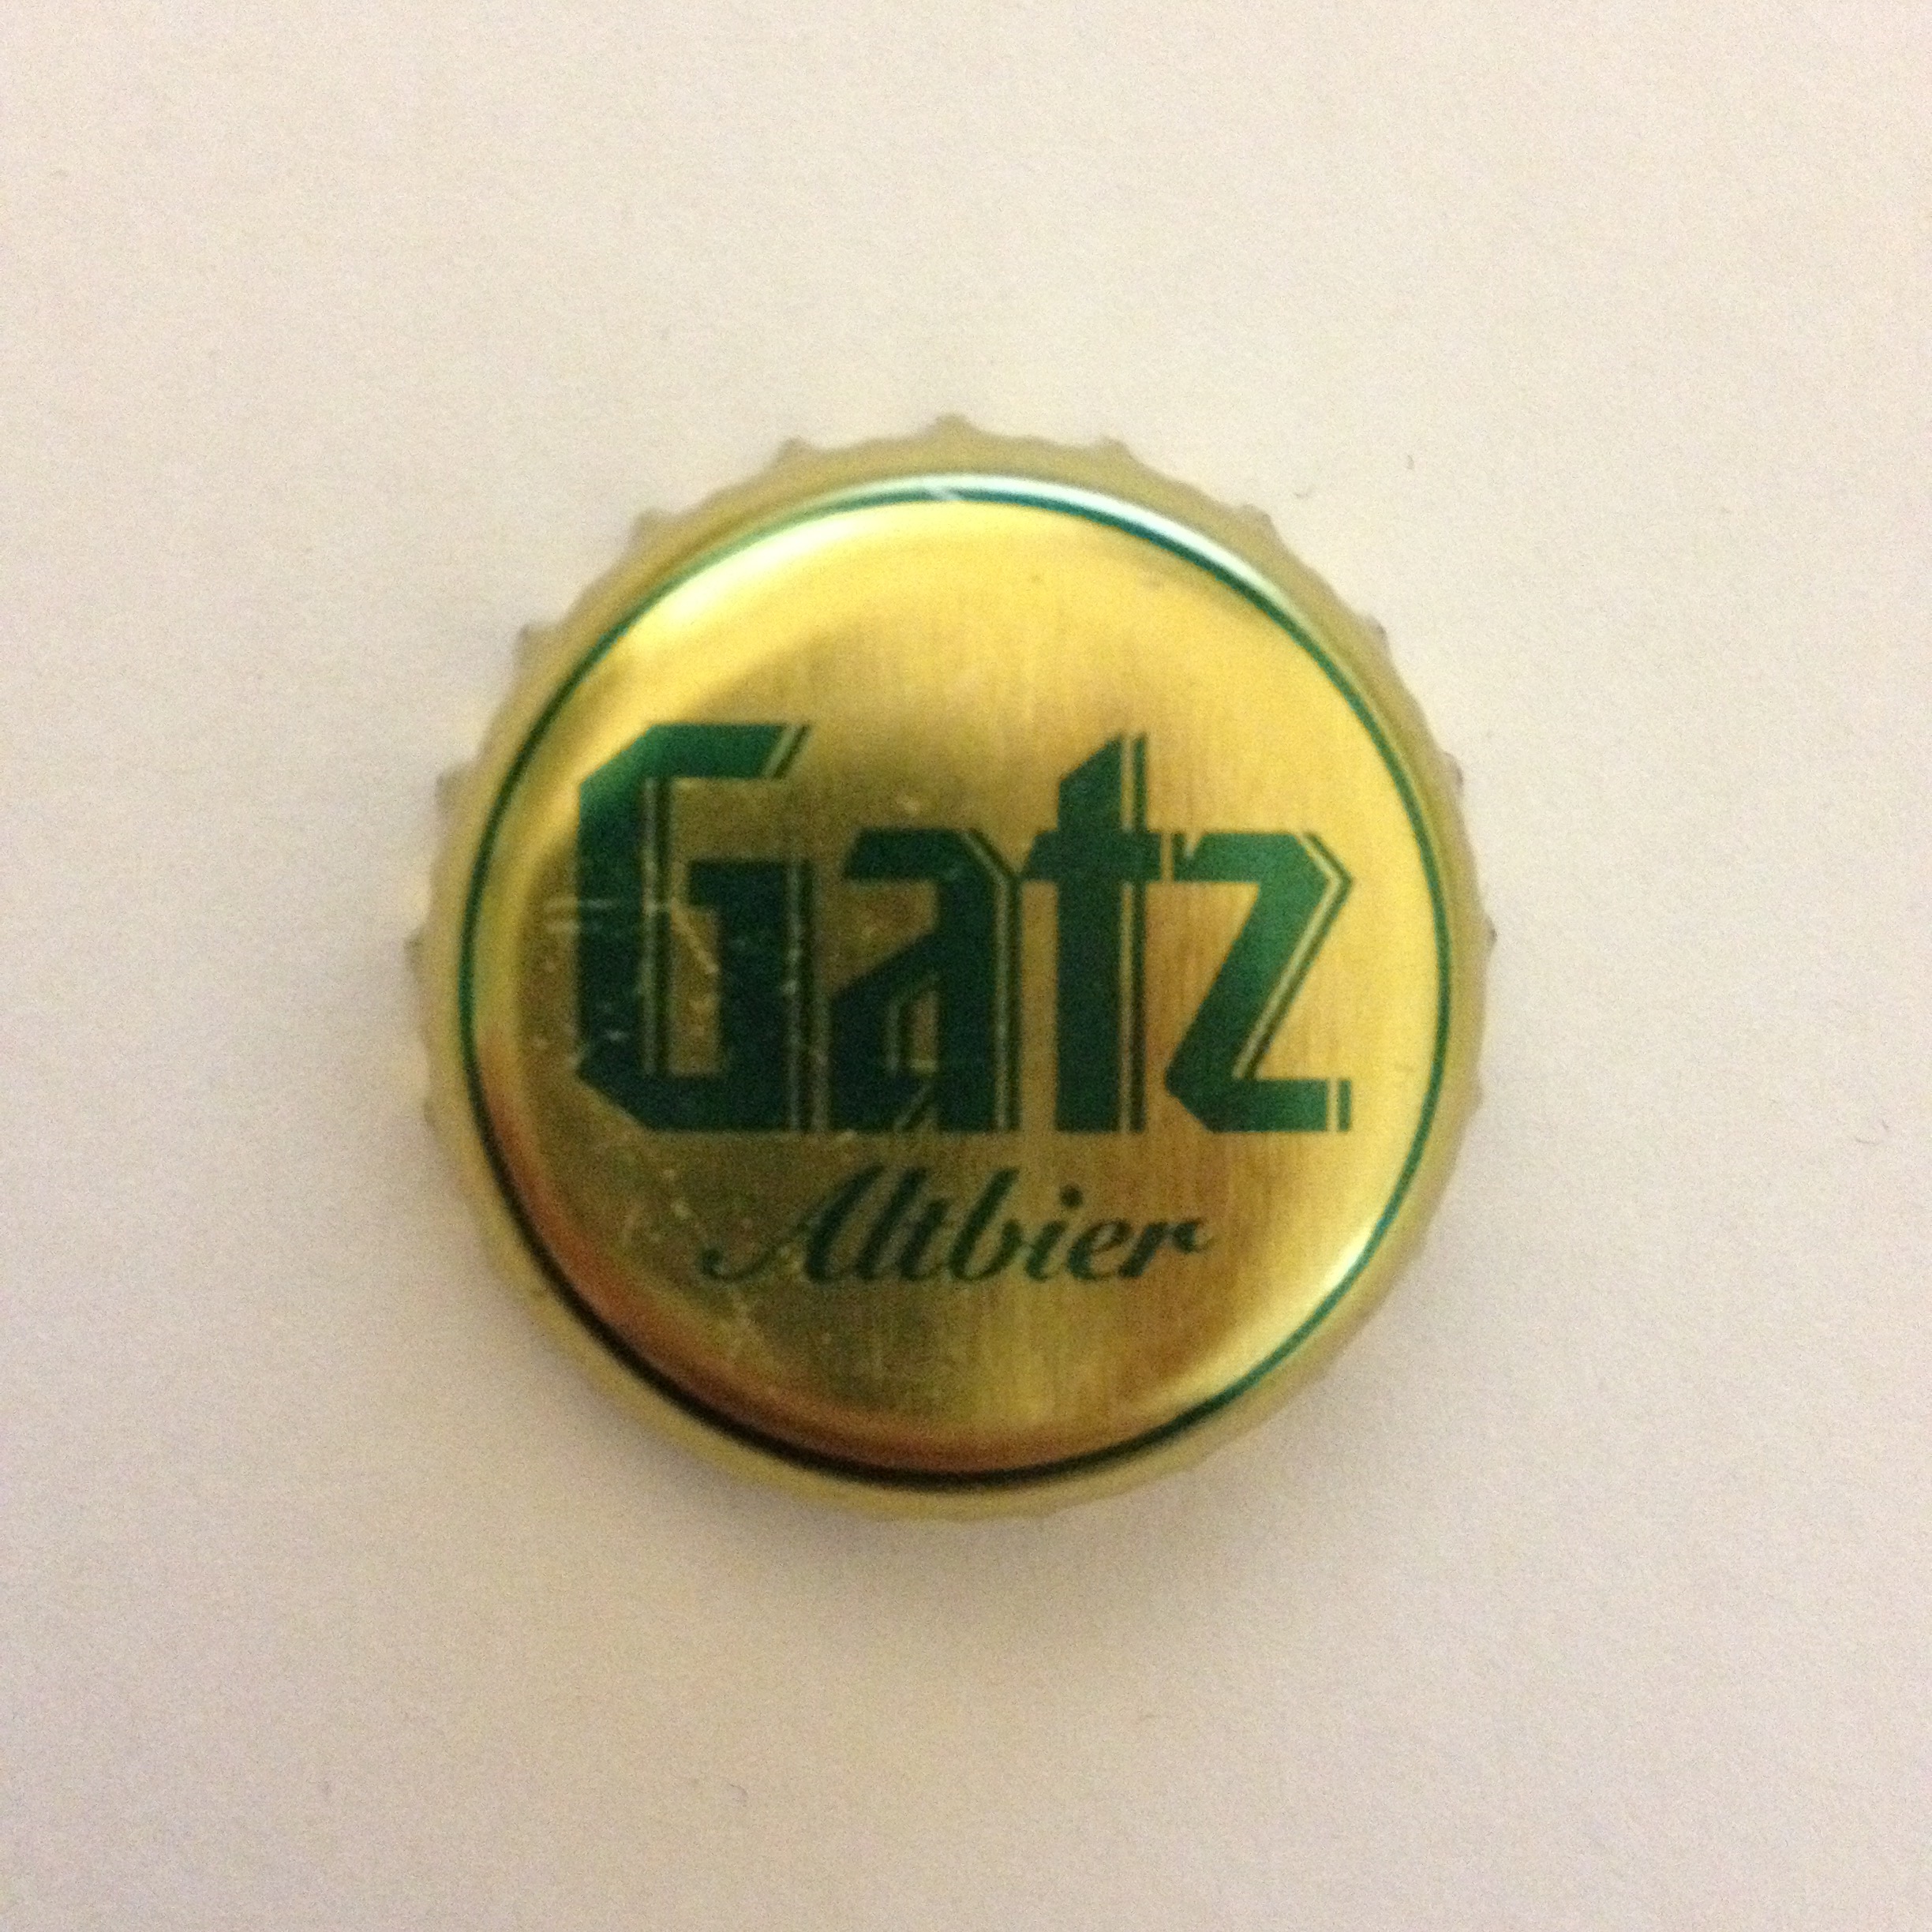 Gatz